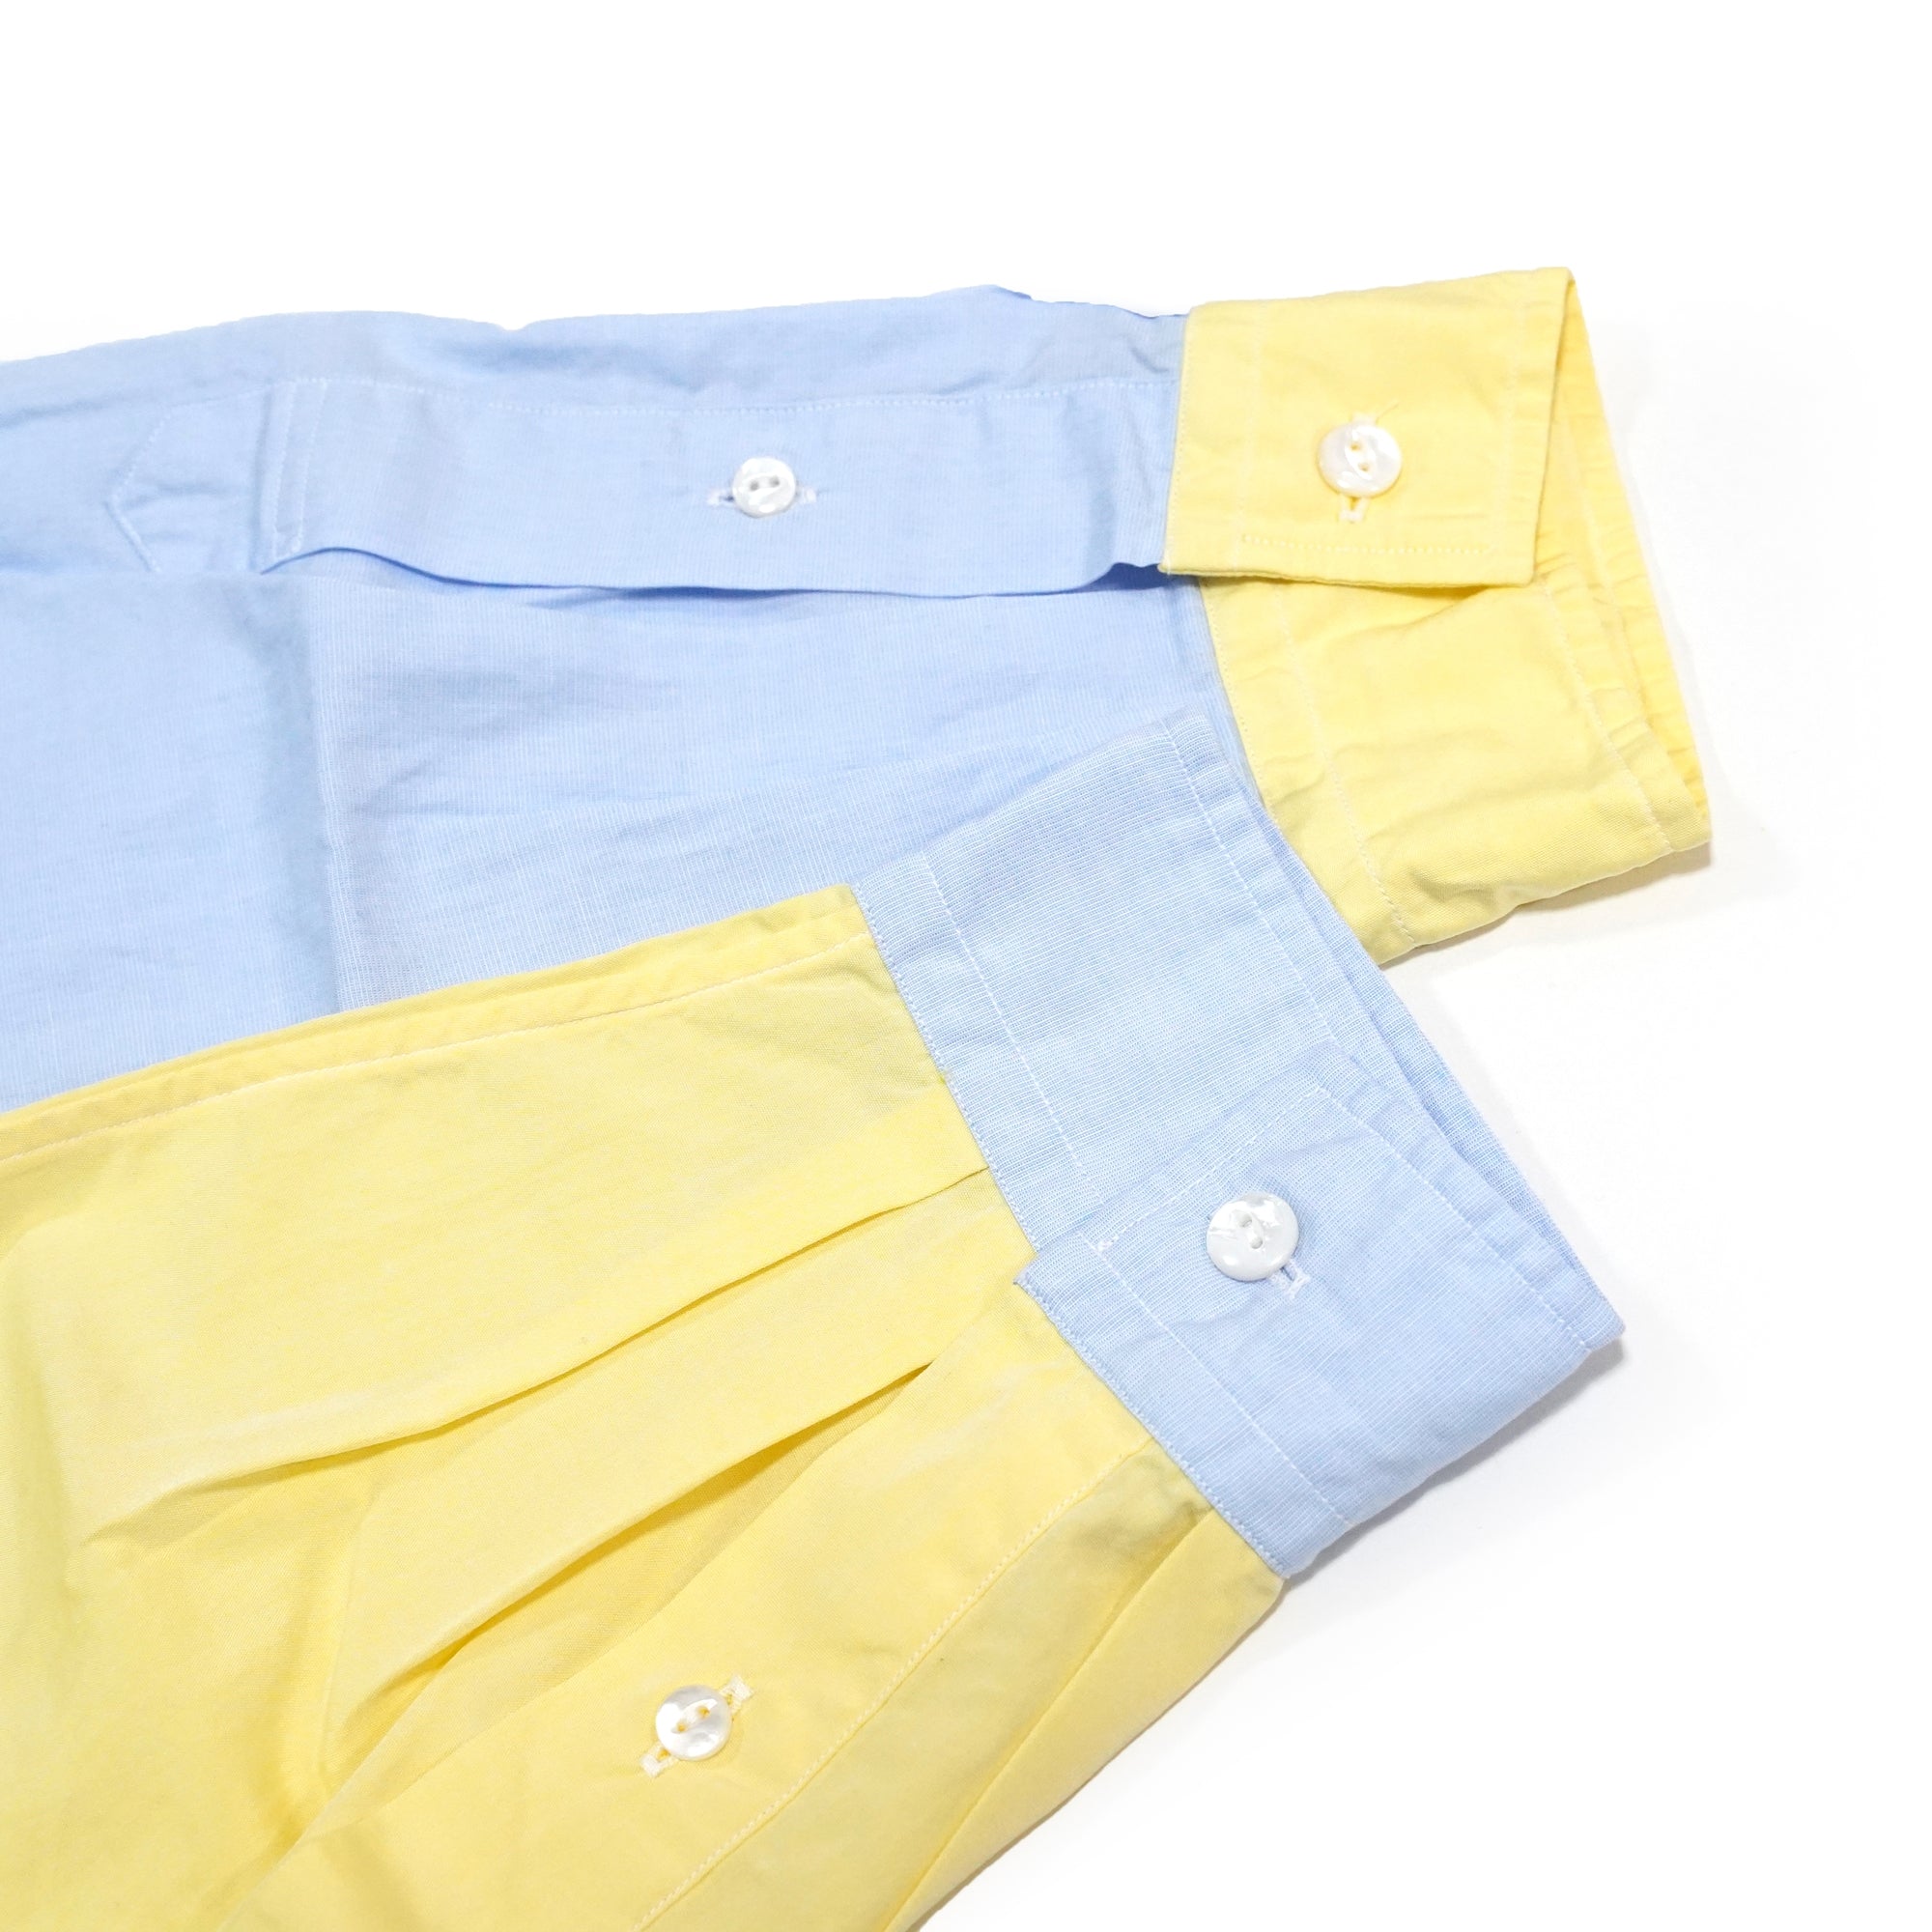 No:WPOCKETSH2021SSB | Name:W Pocket Shirts 100/2 | Color:Multi | Size-M/L【CATTA】-CATTA SHIRTS-ADDICTION FUKUOKA